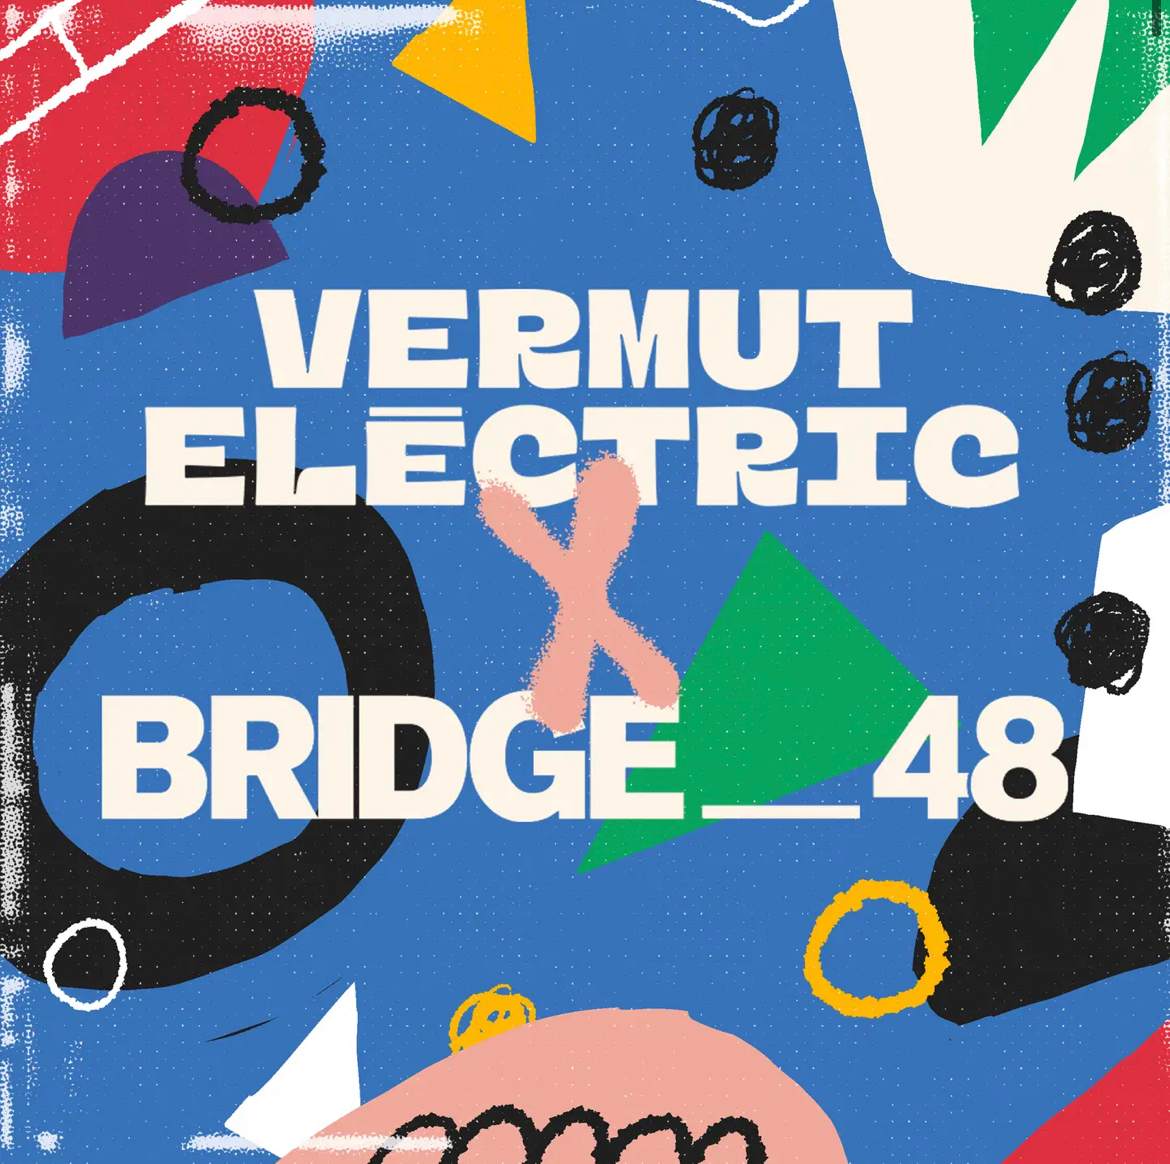 VERMUT ELÈCTRIC X BRIDGE 48 - フライヤー表